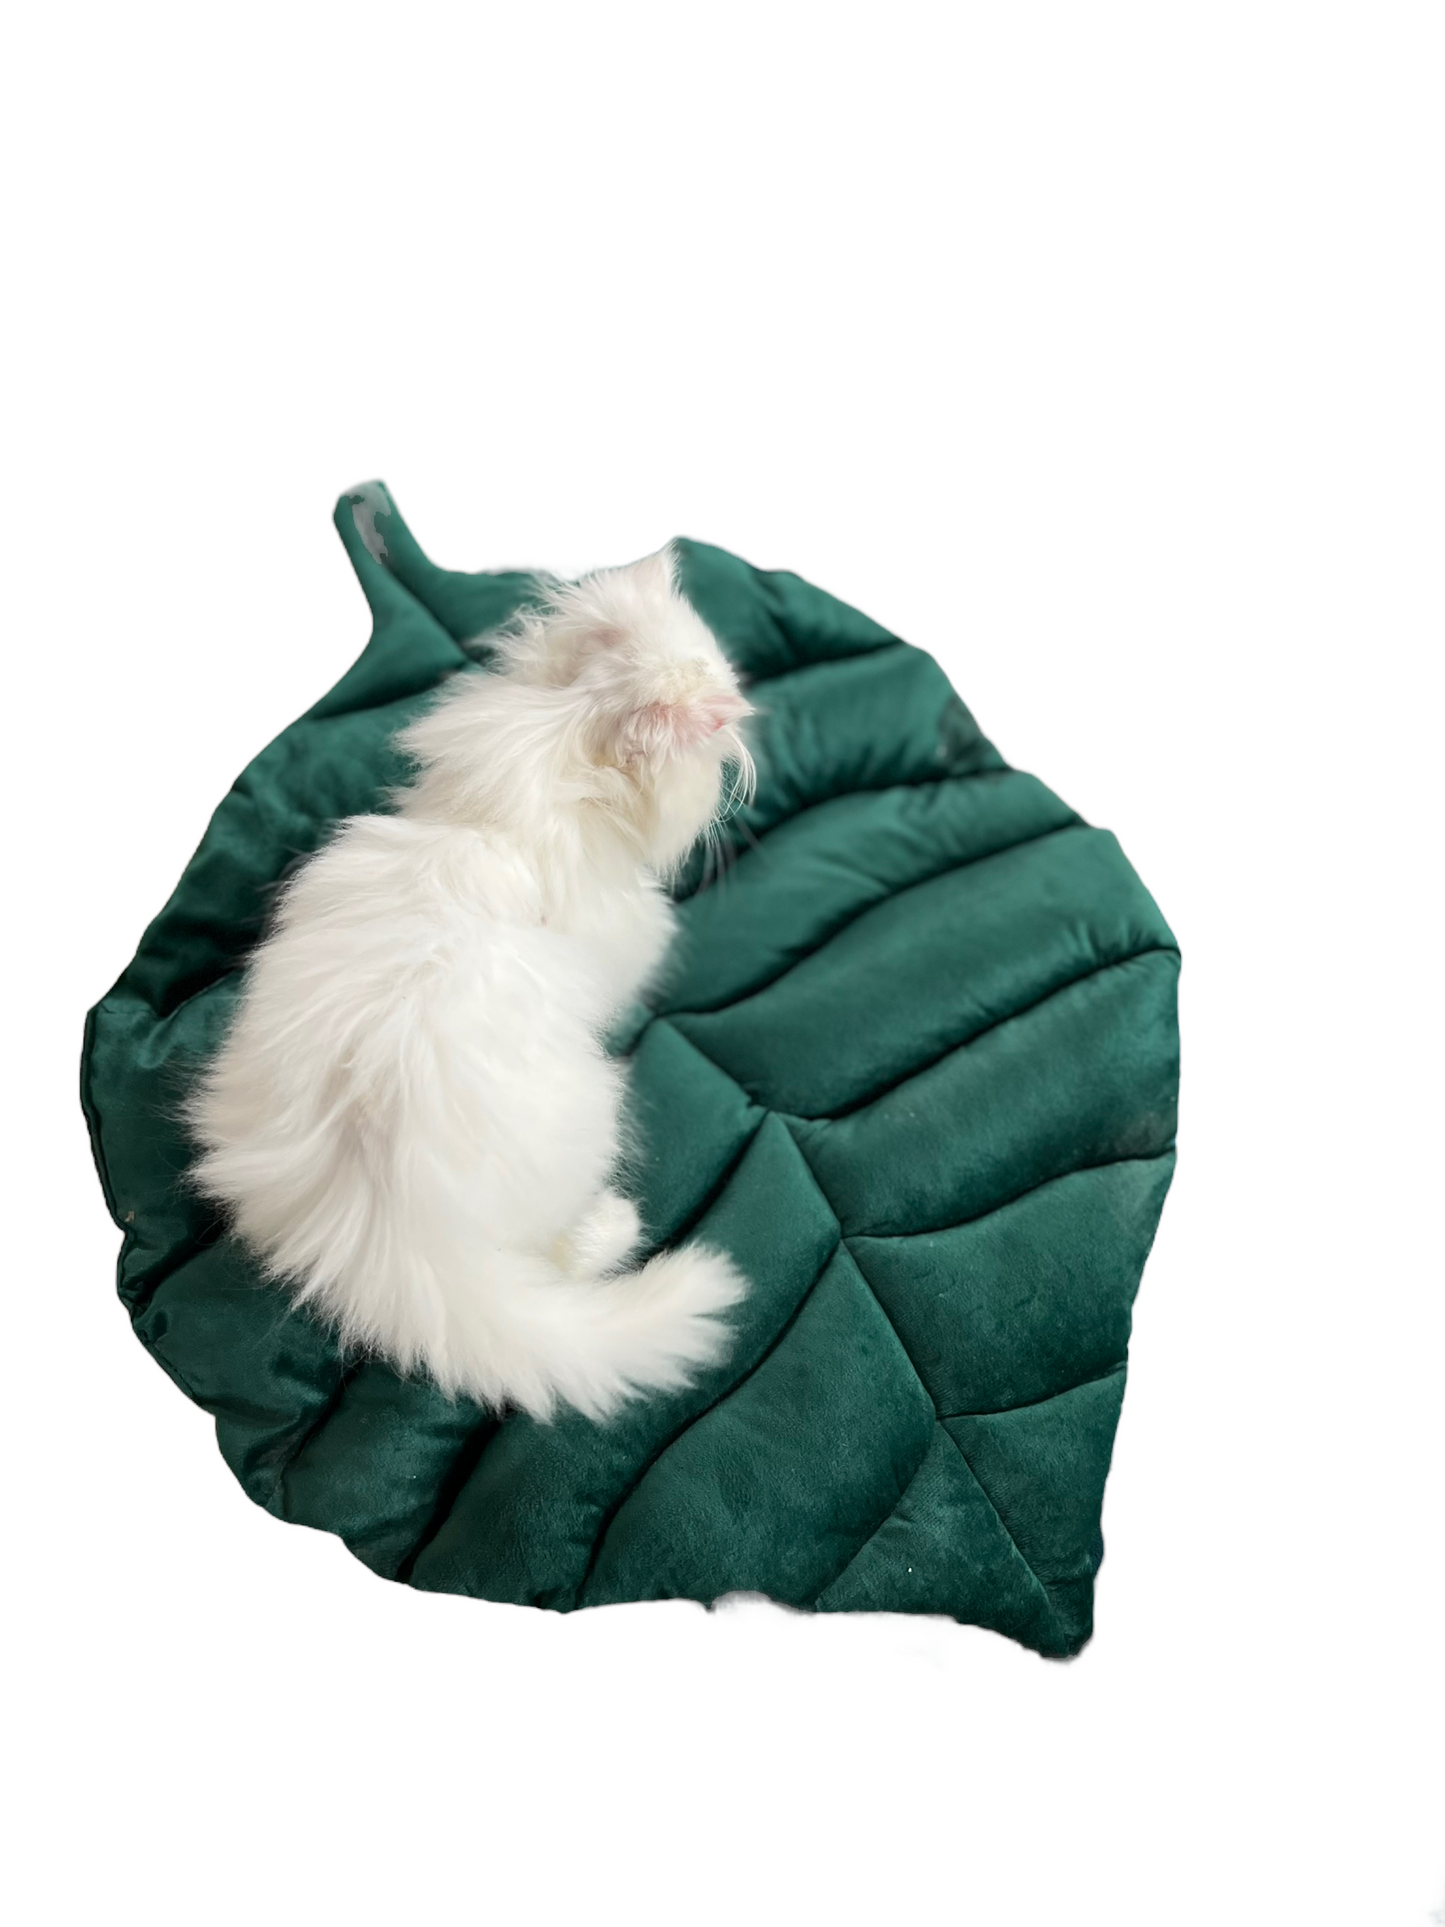 Leaf pet cushion 🍃